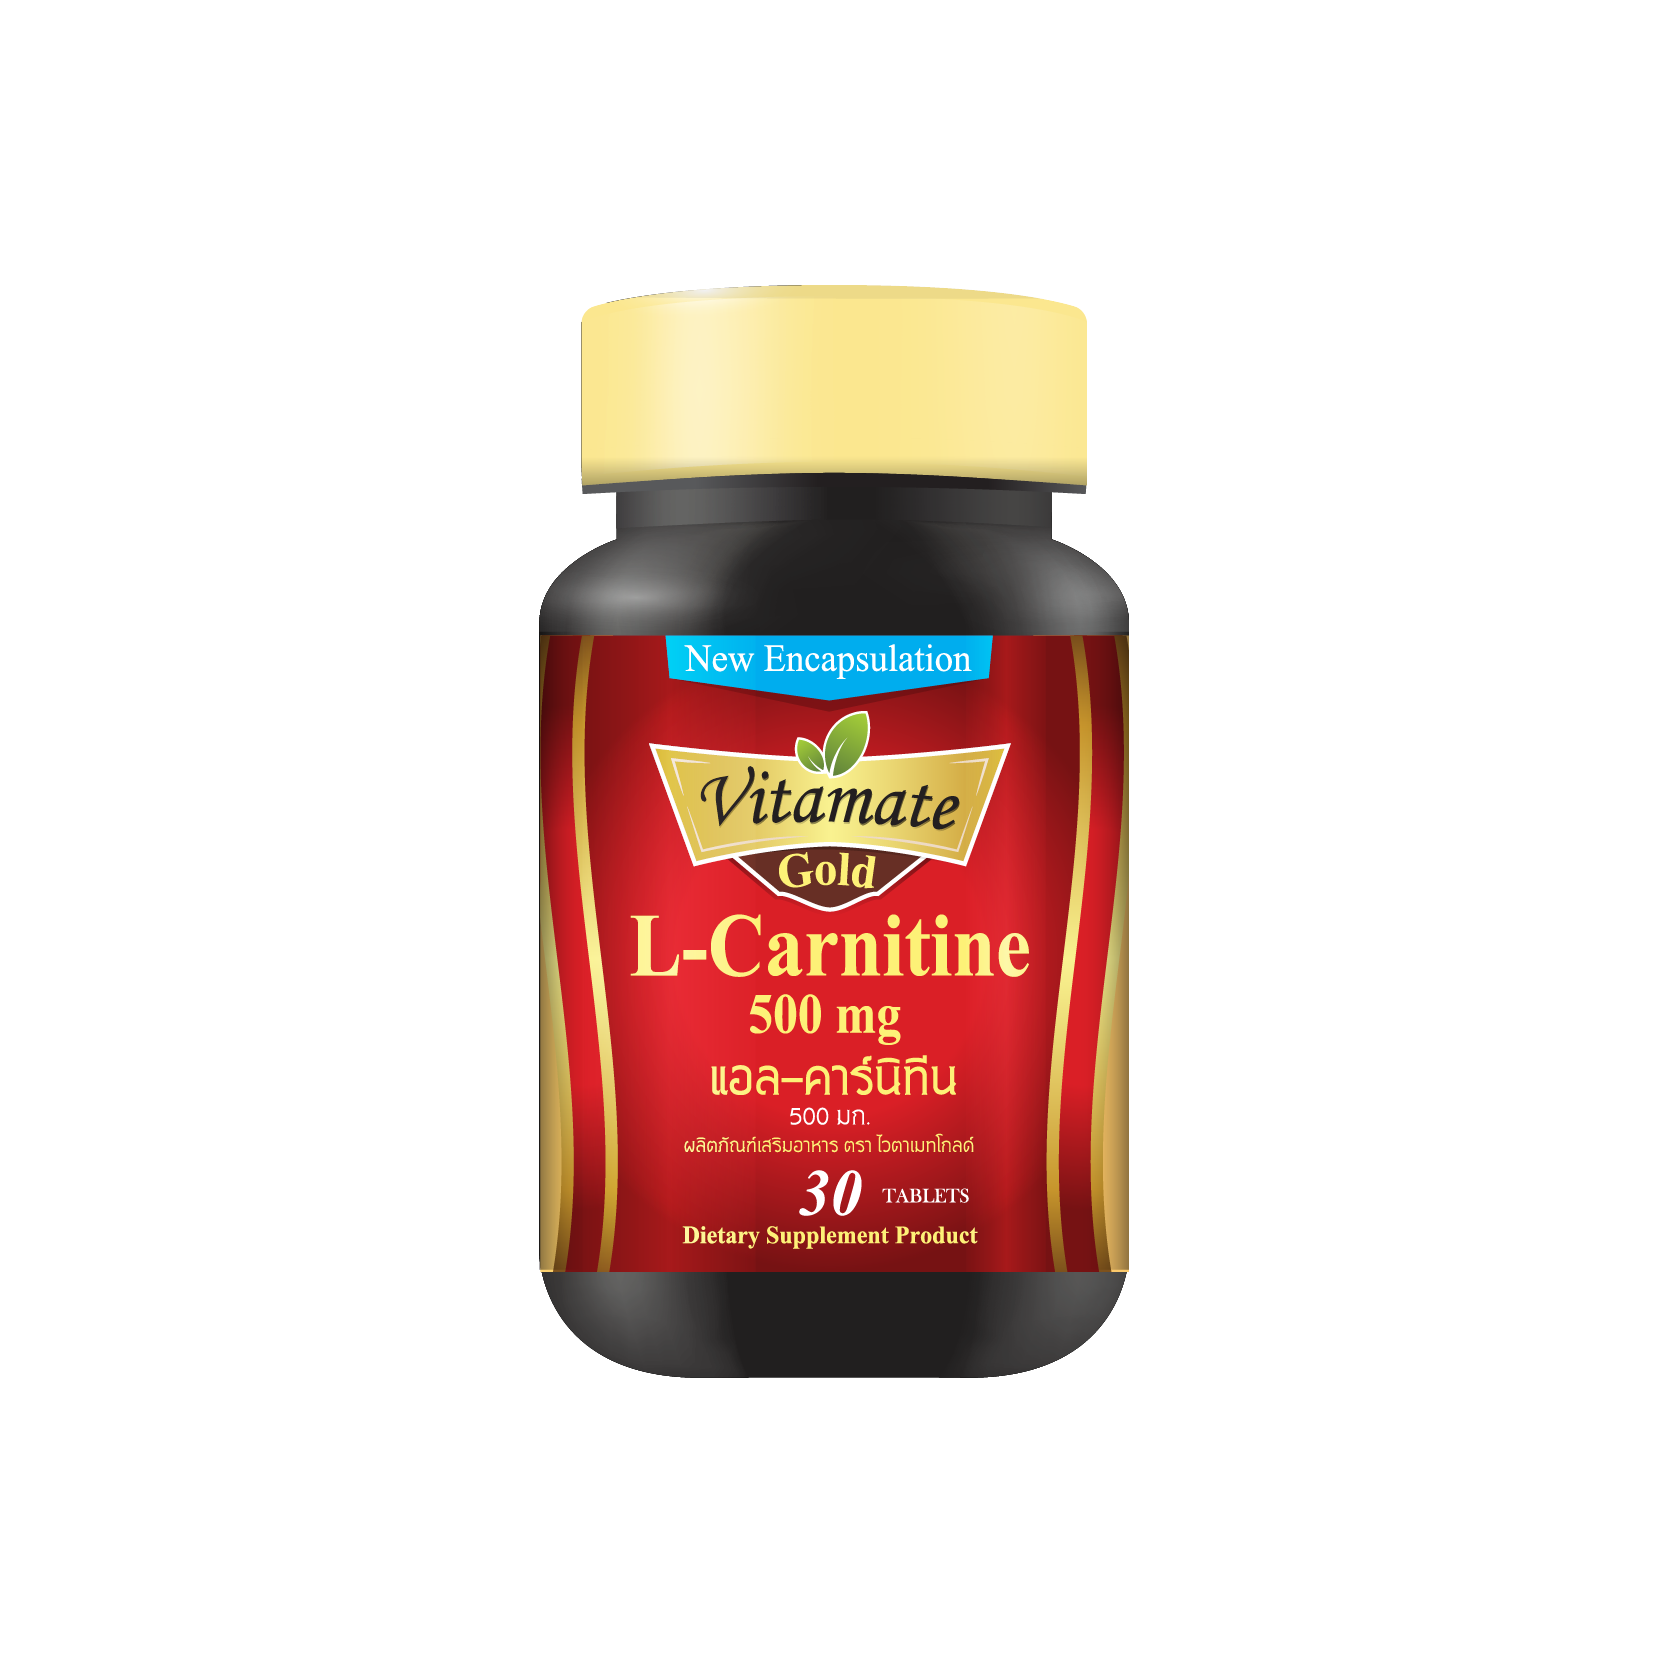 Vitamate Gold L-Carnitine 500 mg 30 tablets